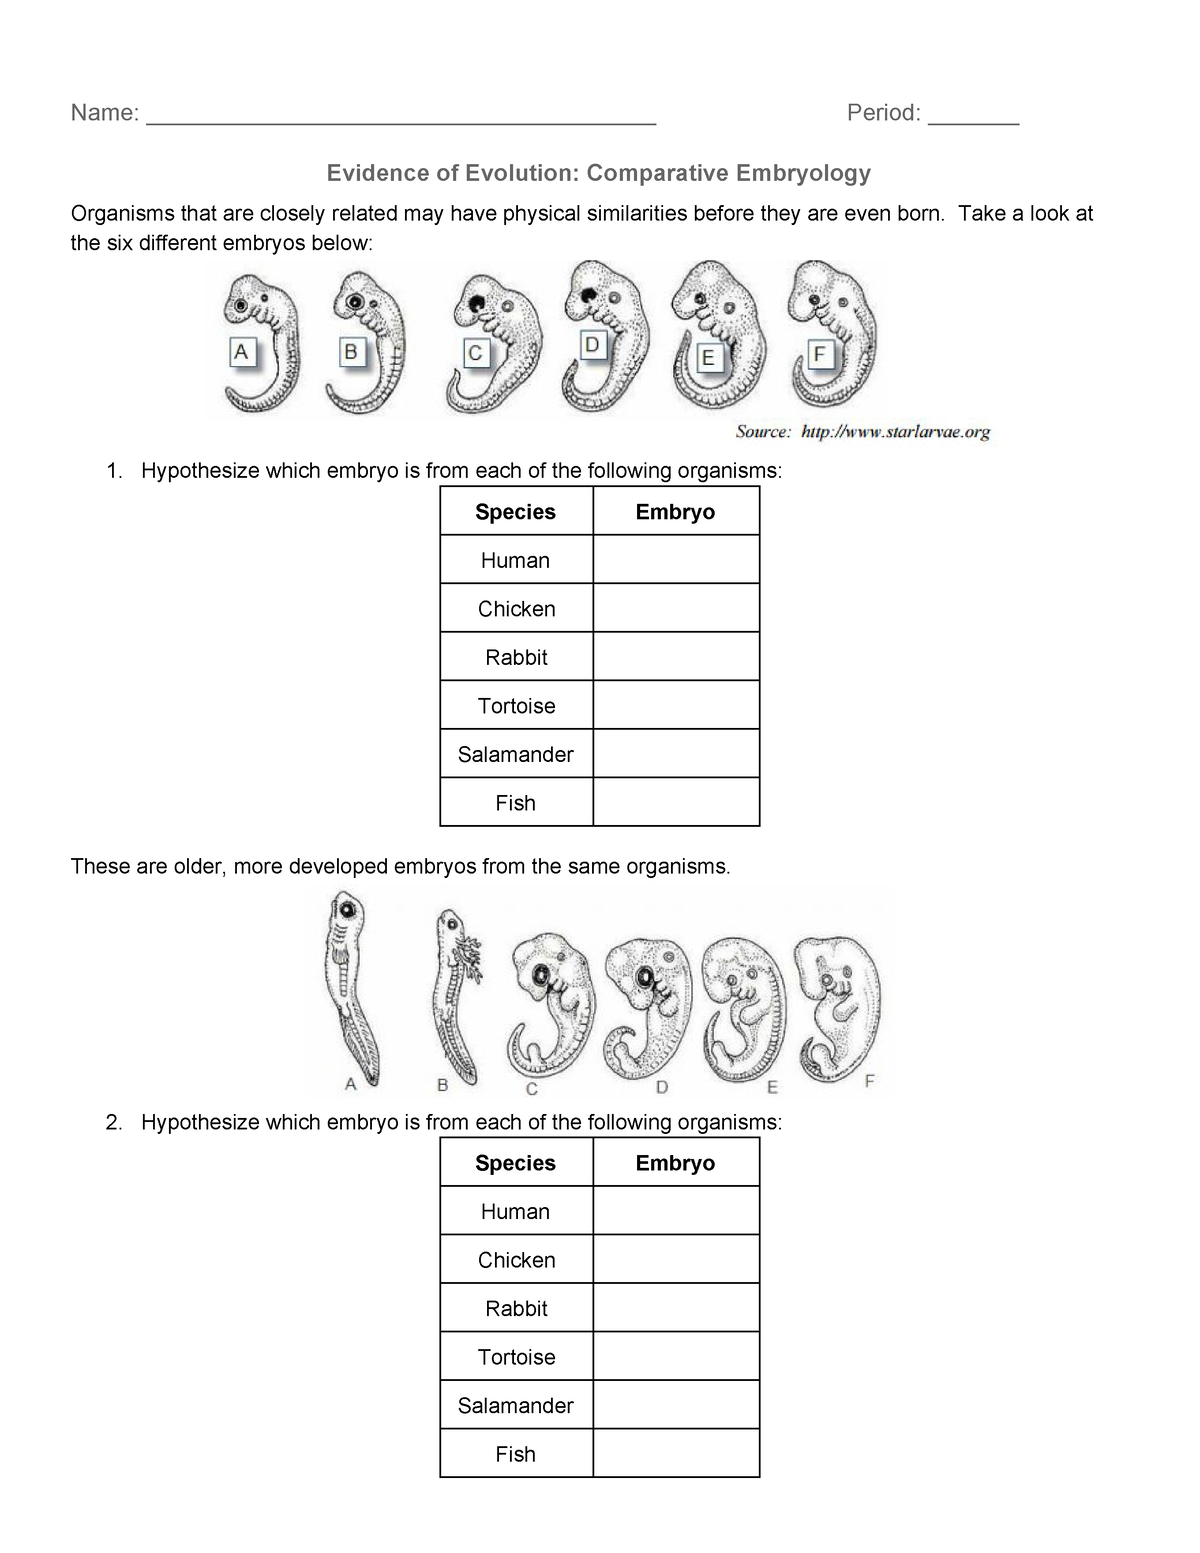 Evidence of Evolution Comparative Embryology - Name